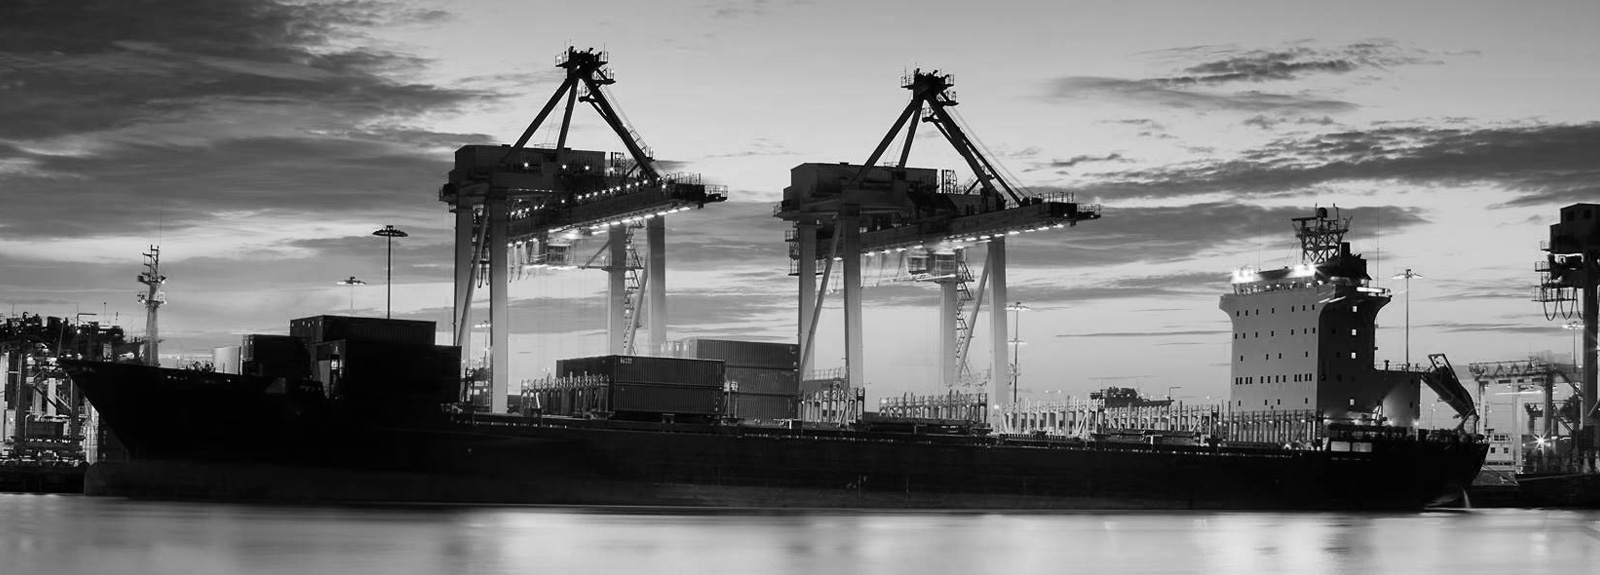 shipyard-to-use-on-website-black.jpg